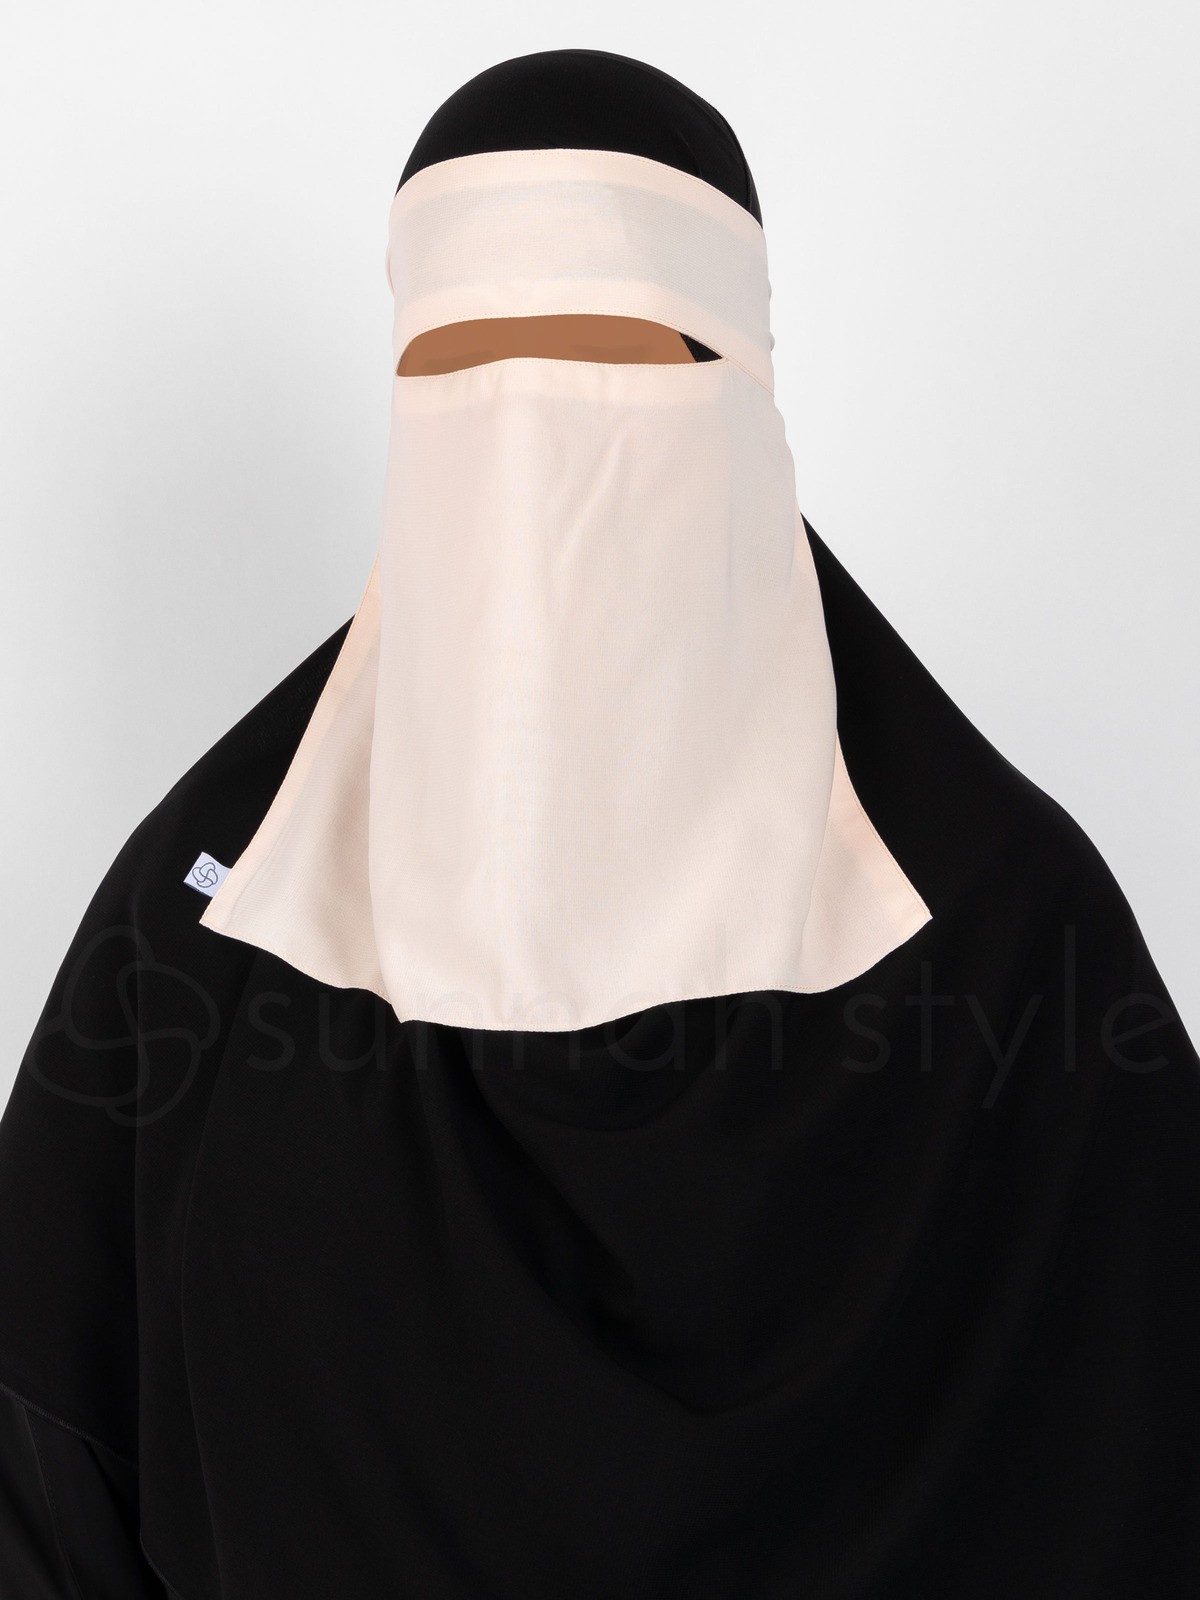 Sunnah Style - Short One Layer Niqab (Creamy Peach)